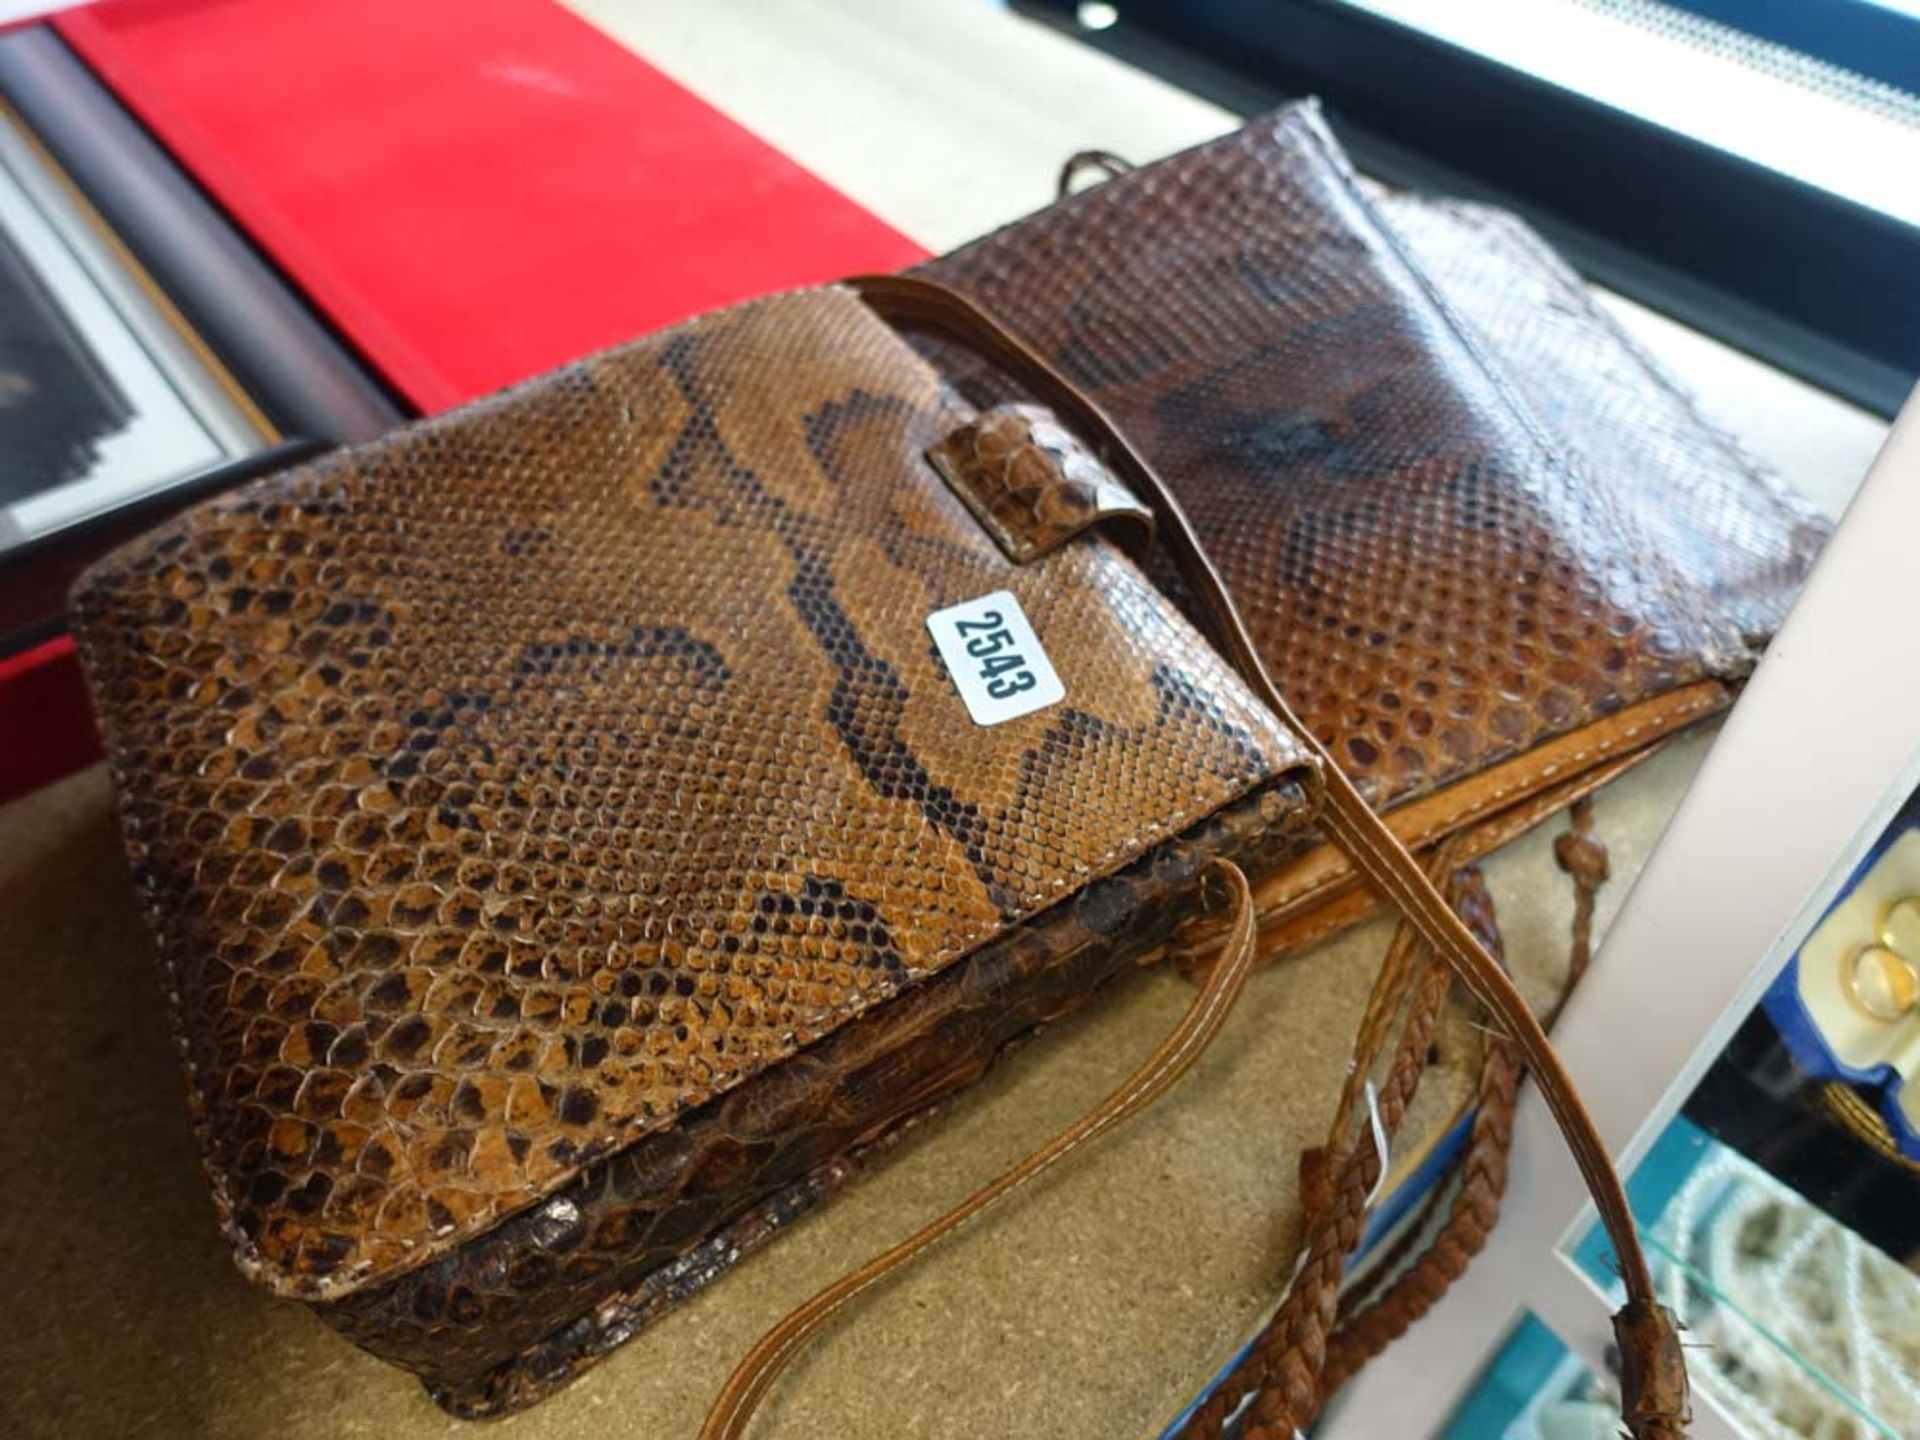 (2034MIDC) 204 - Three 1950's snakeskin handbags with rattan handles